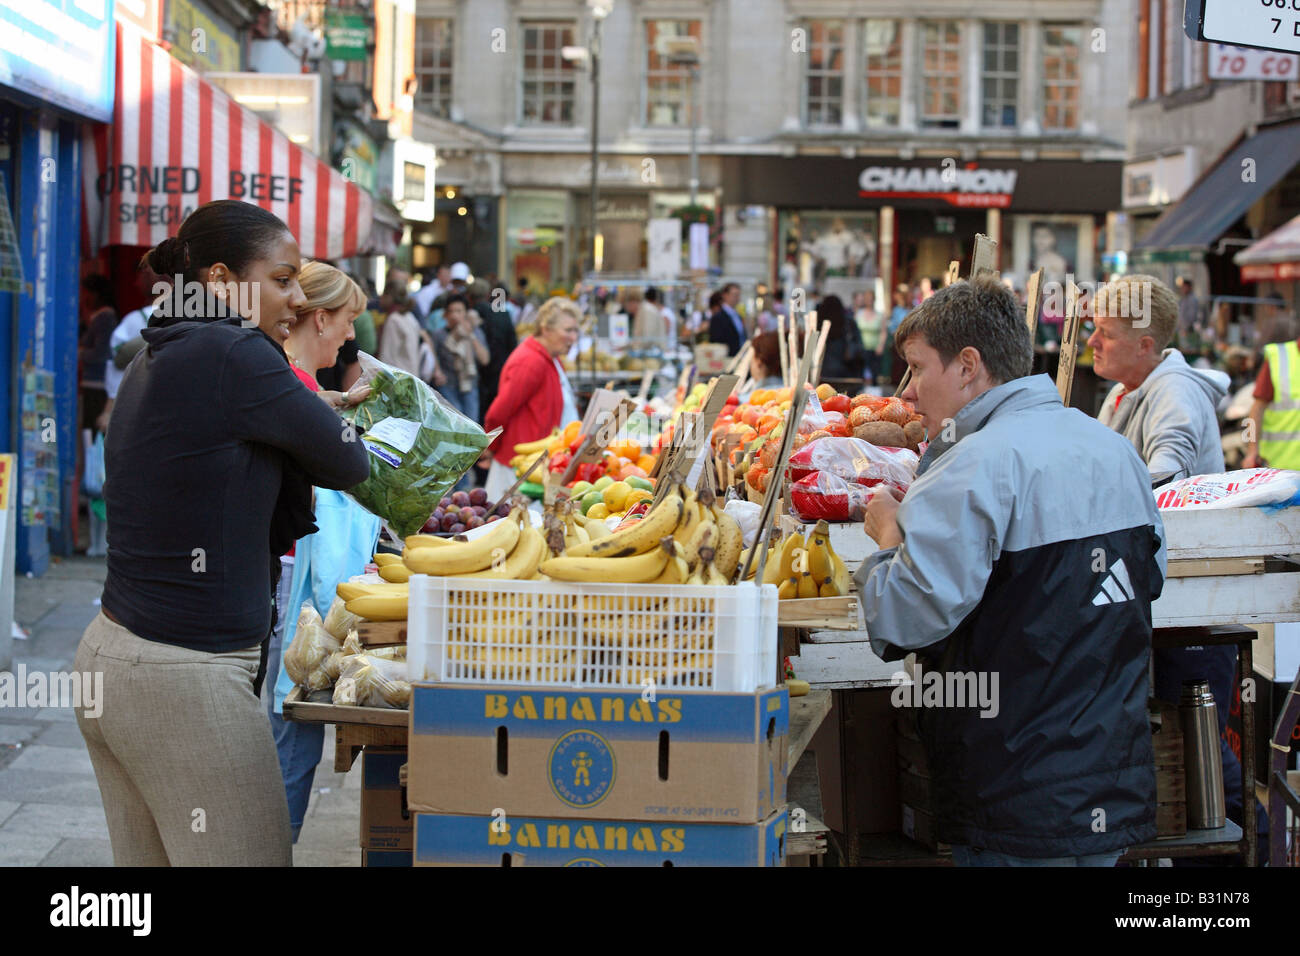  People  at a street market in Dublin  Ireland  Stock Photo 